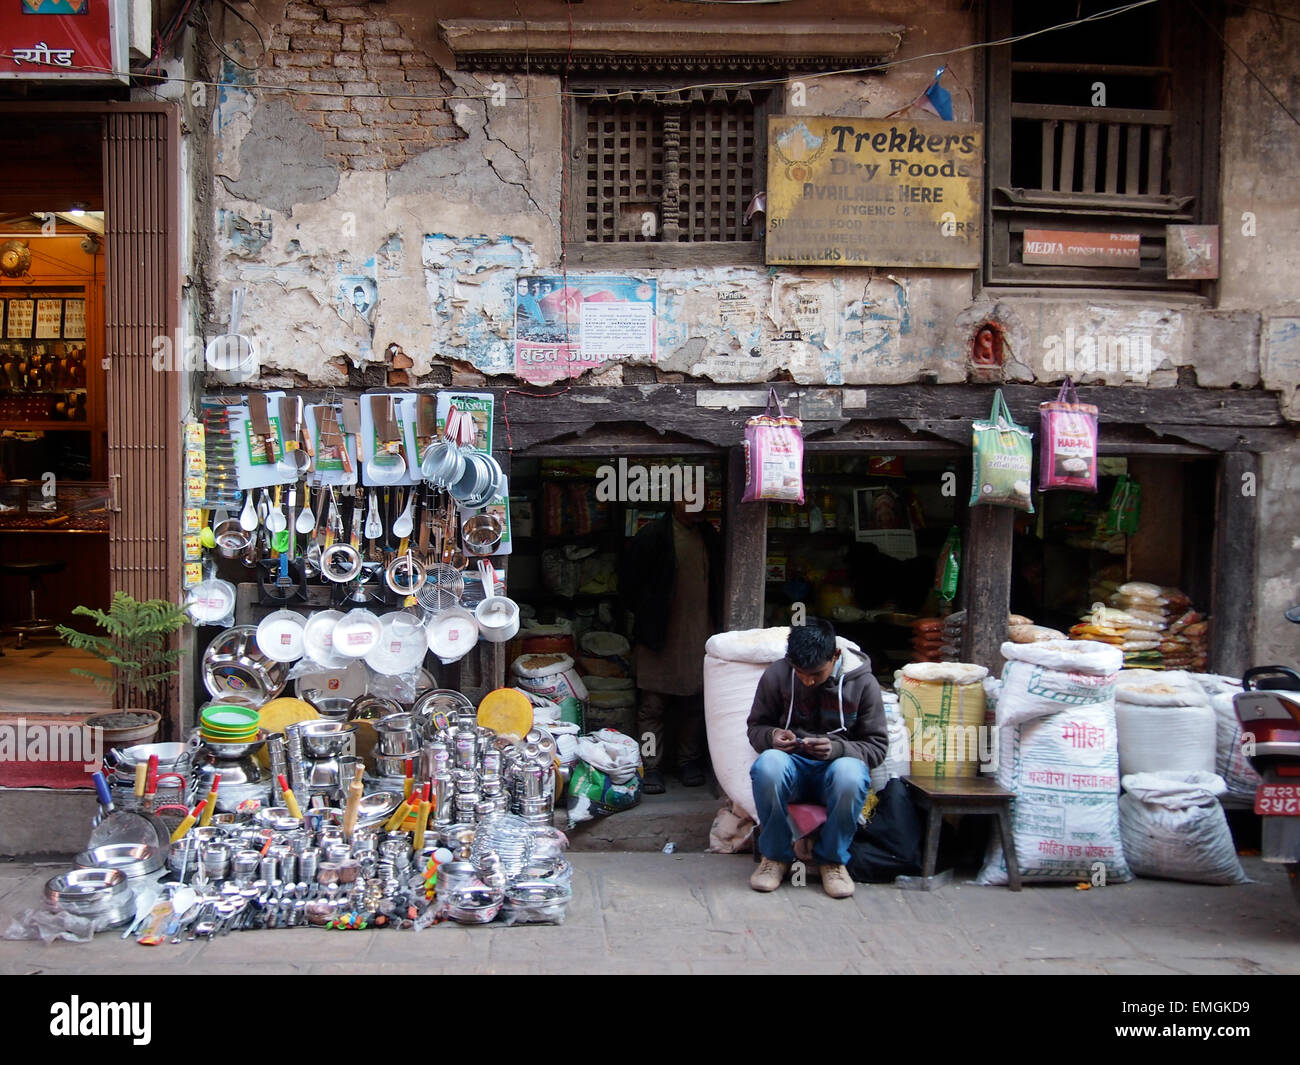 Trekkers Market Stall Shop Pots Pans Lukla Nepal Asia Stock Photo